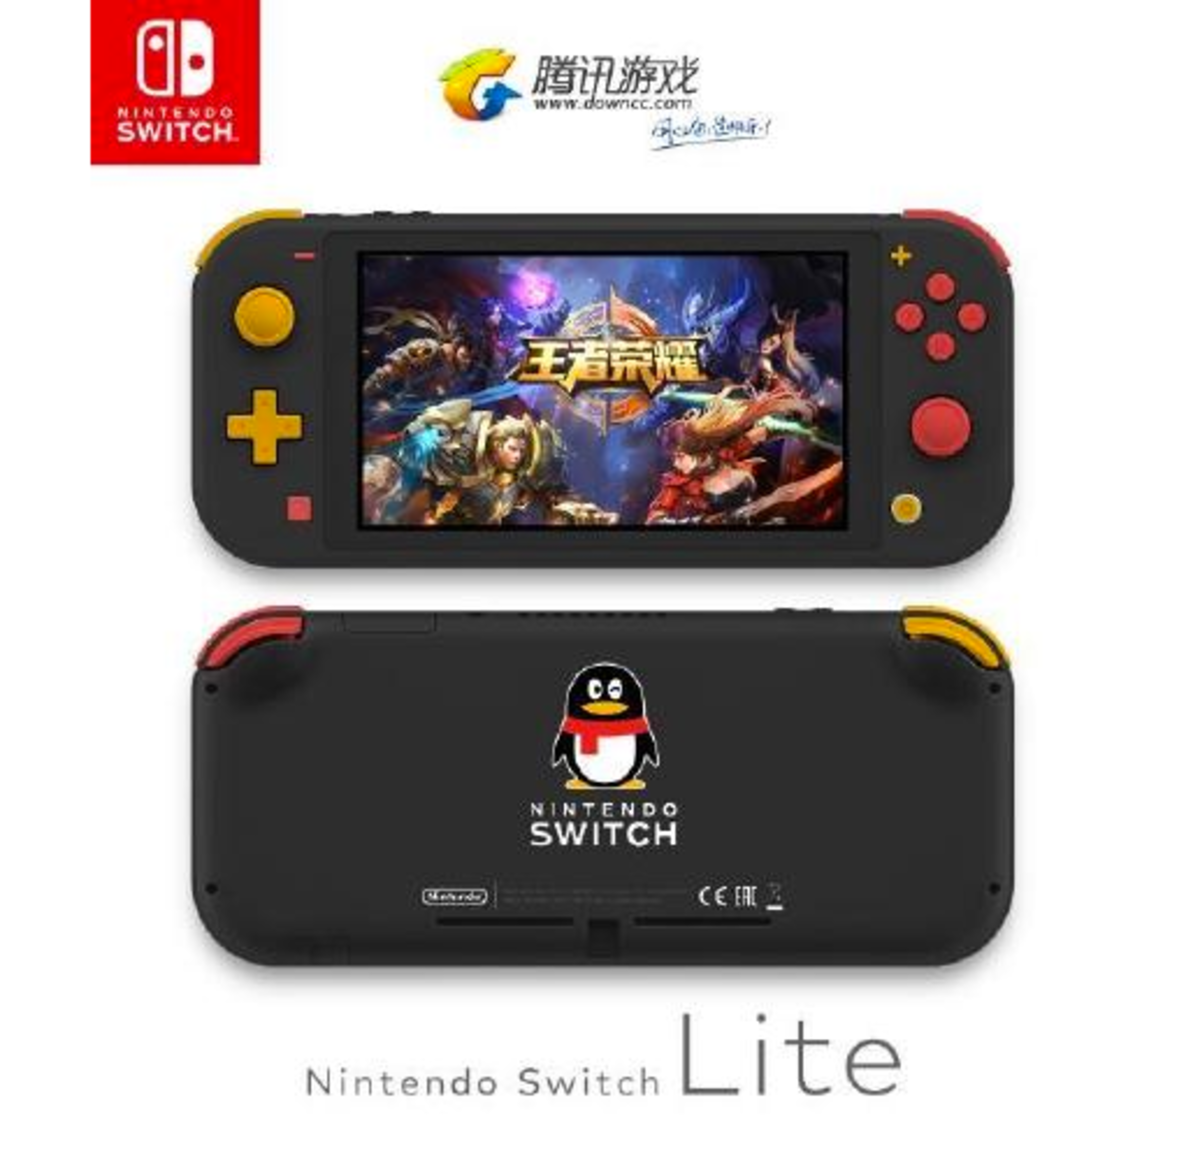 Nintendo Switch Lite design